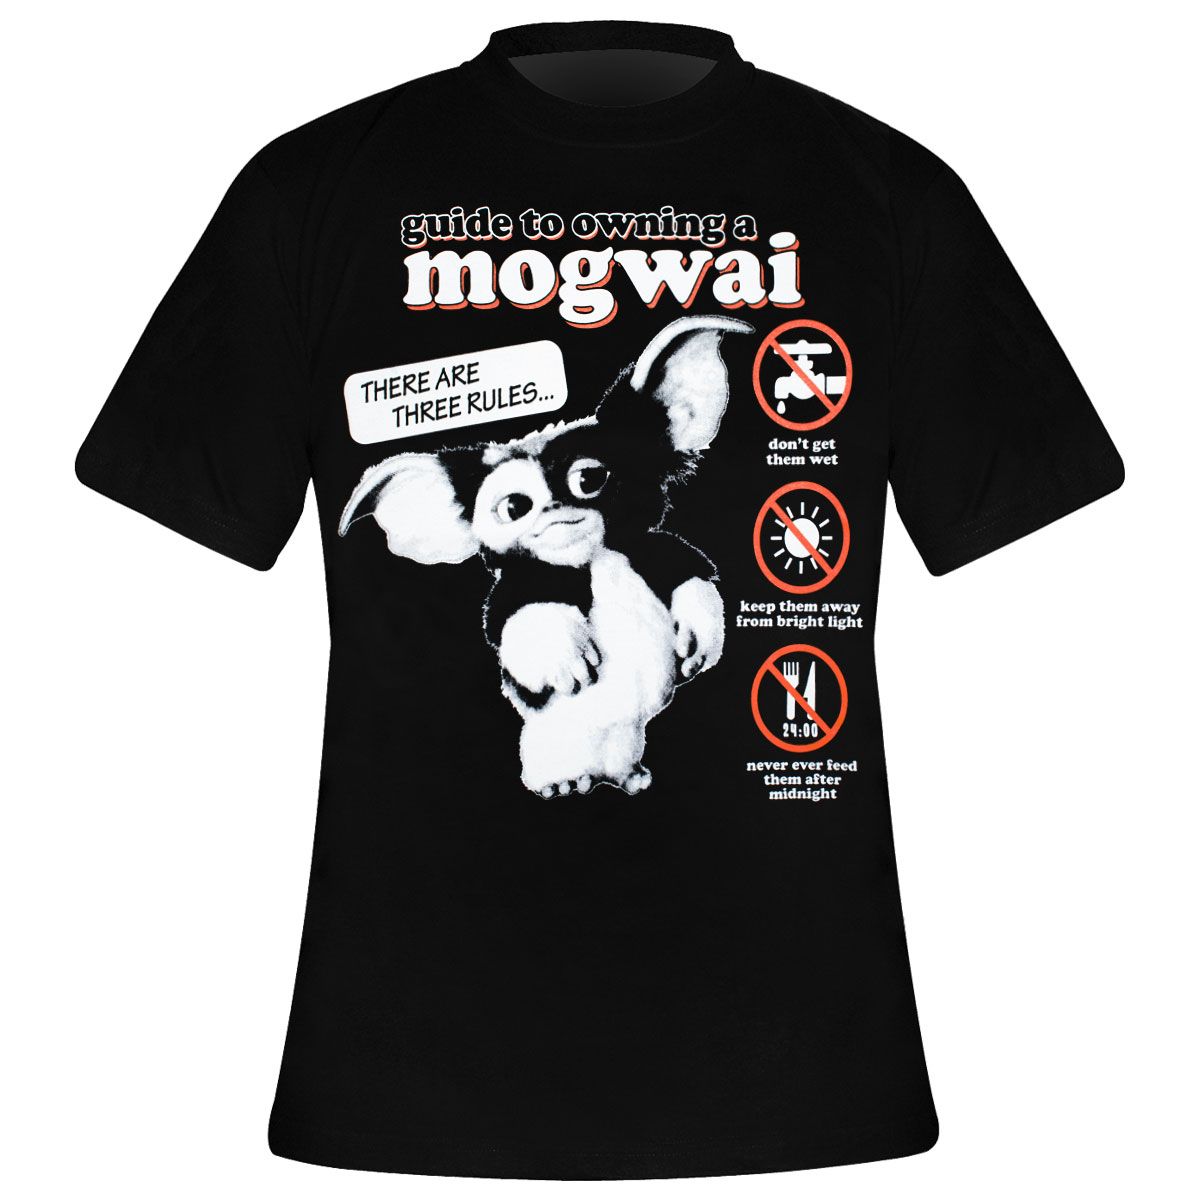 A person wearing a t-shirt featuring a Gizmo Mogwai Motif